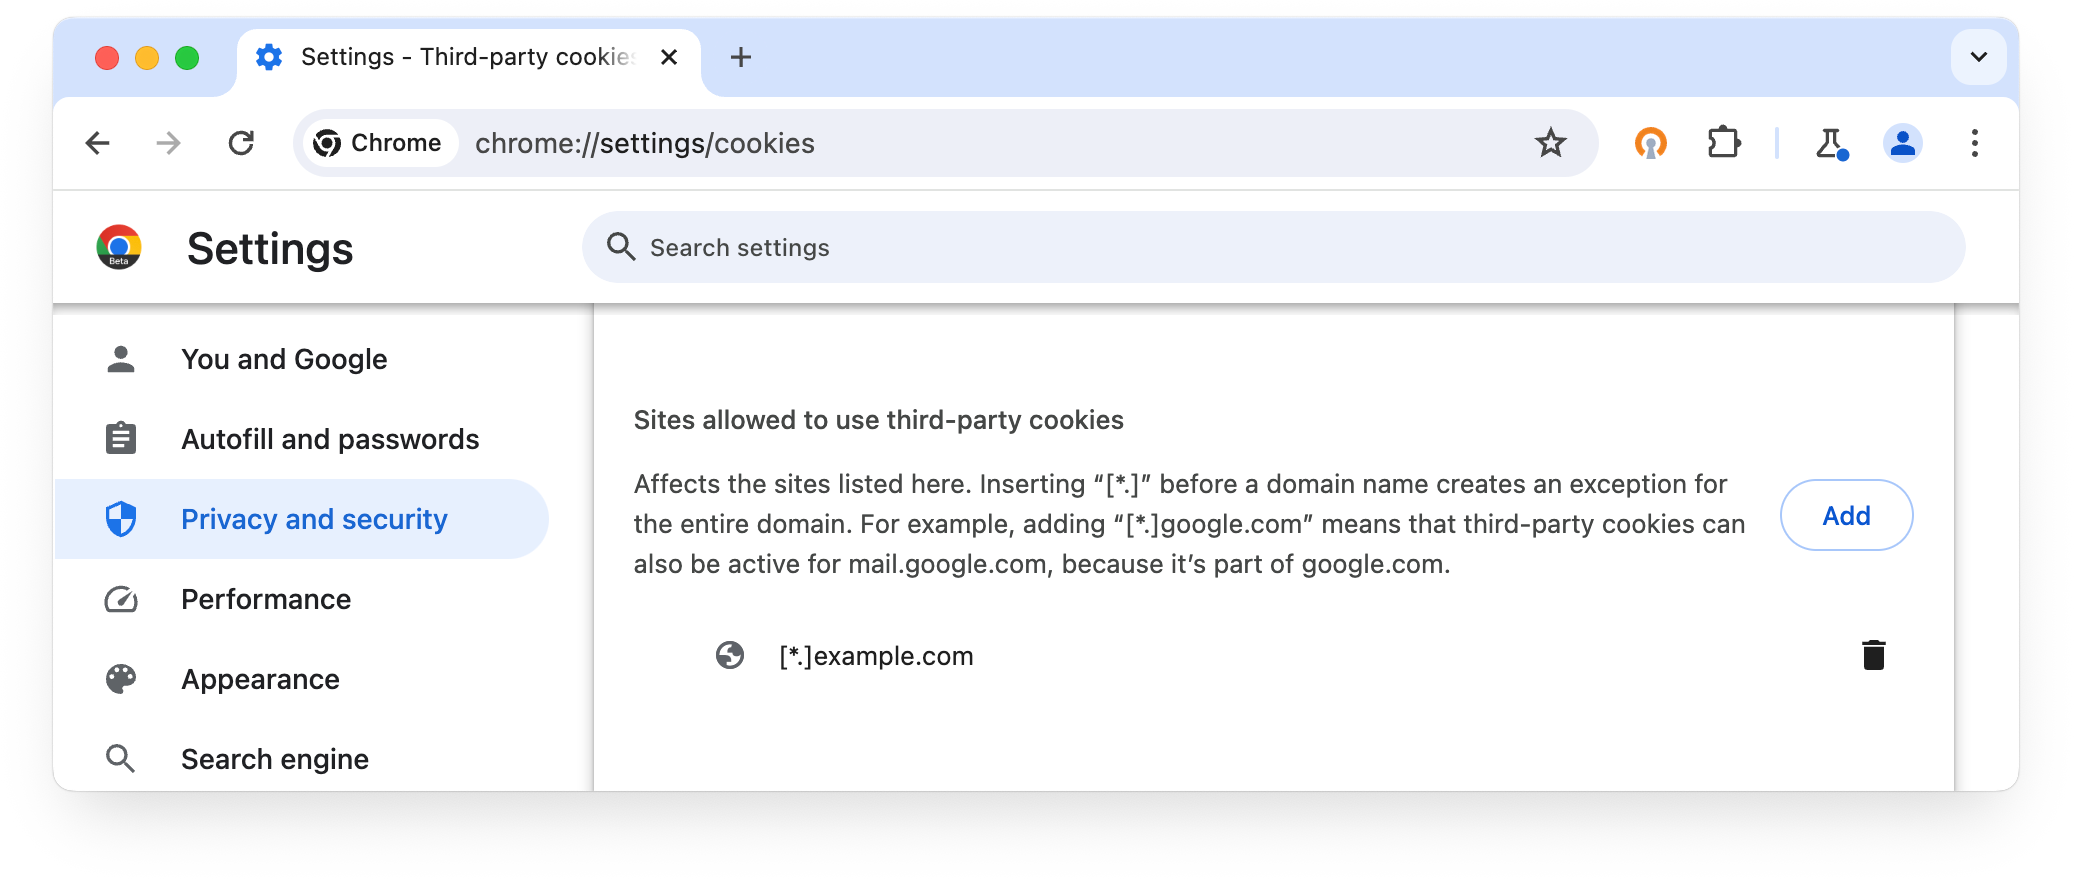 chrome://settings/cookies: siti autorizzati a utilizzare i cookie di terze parti